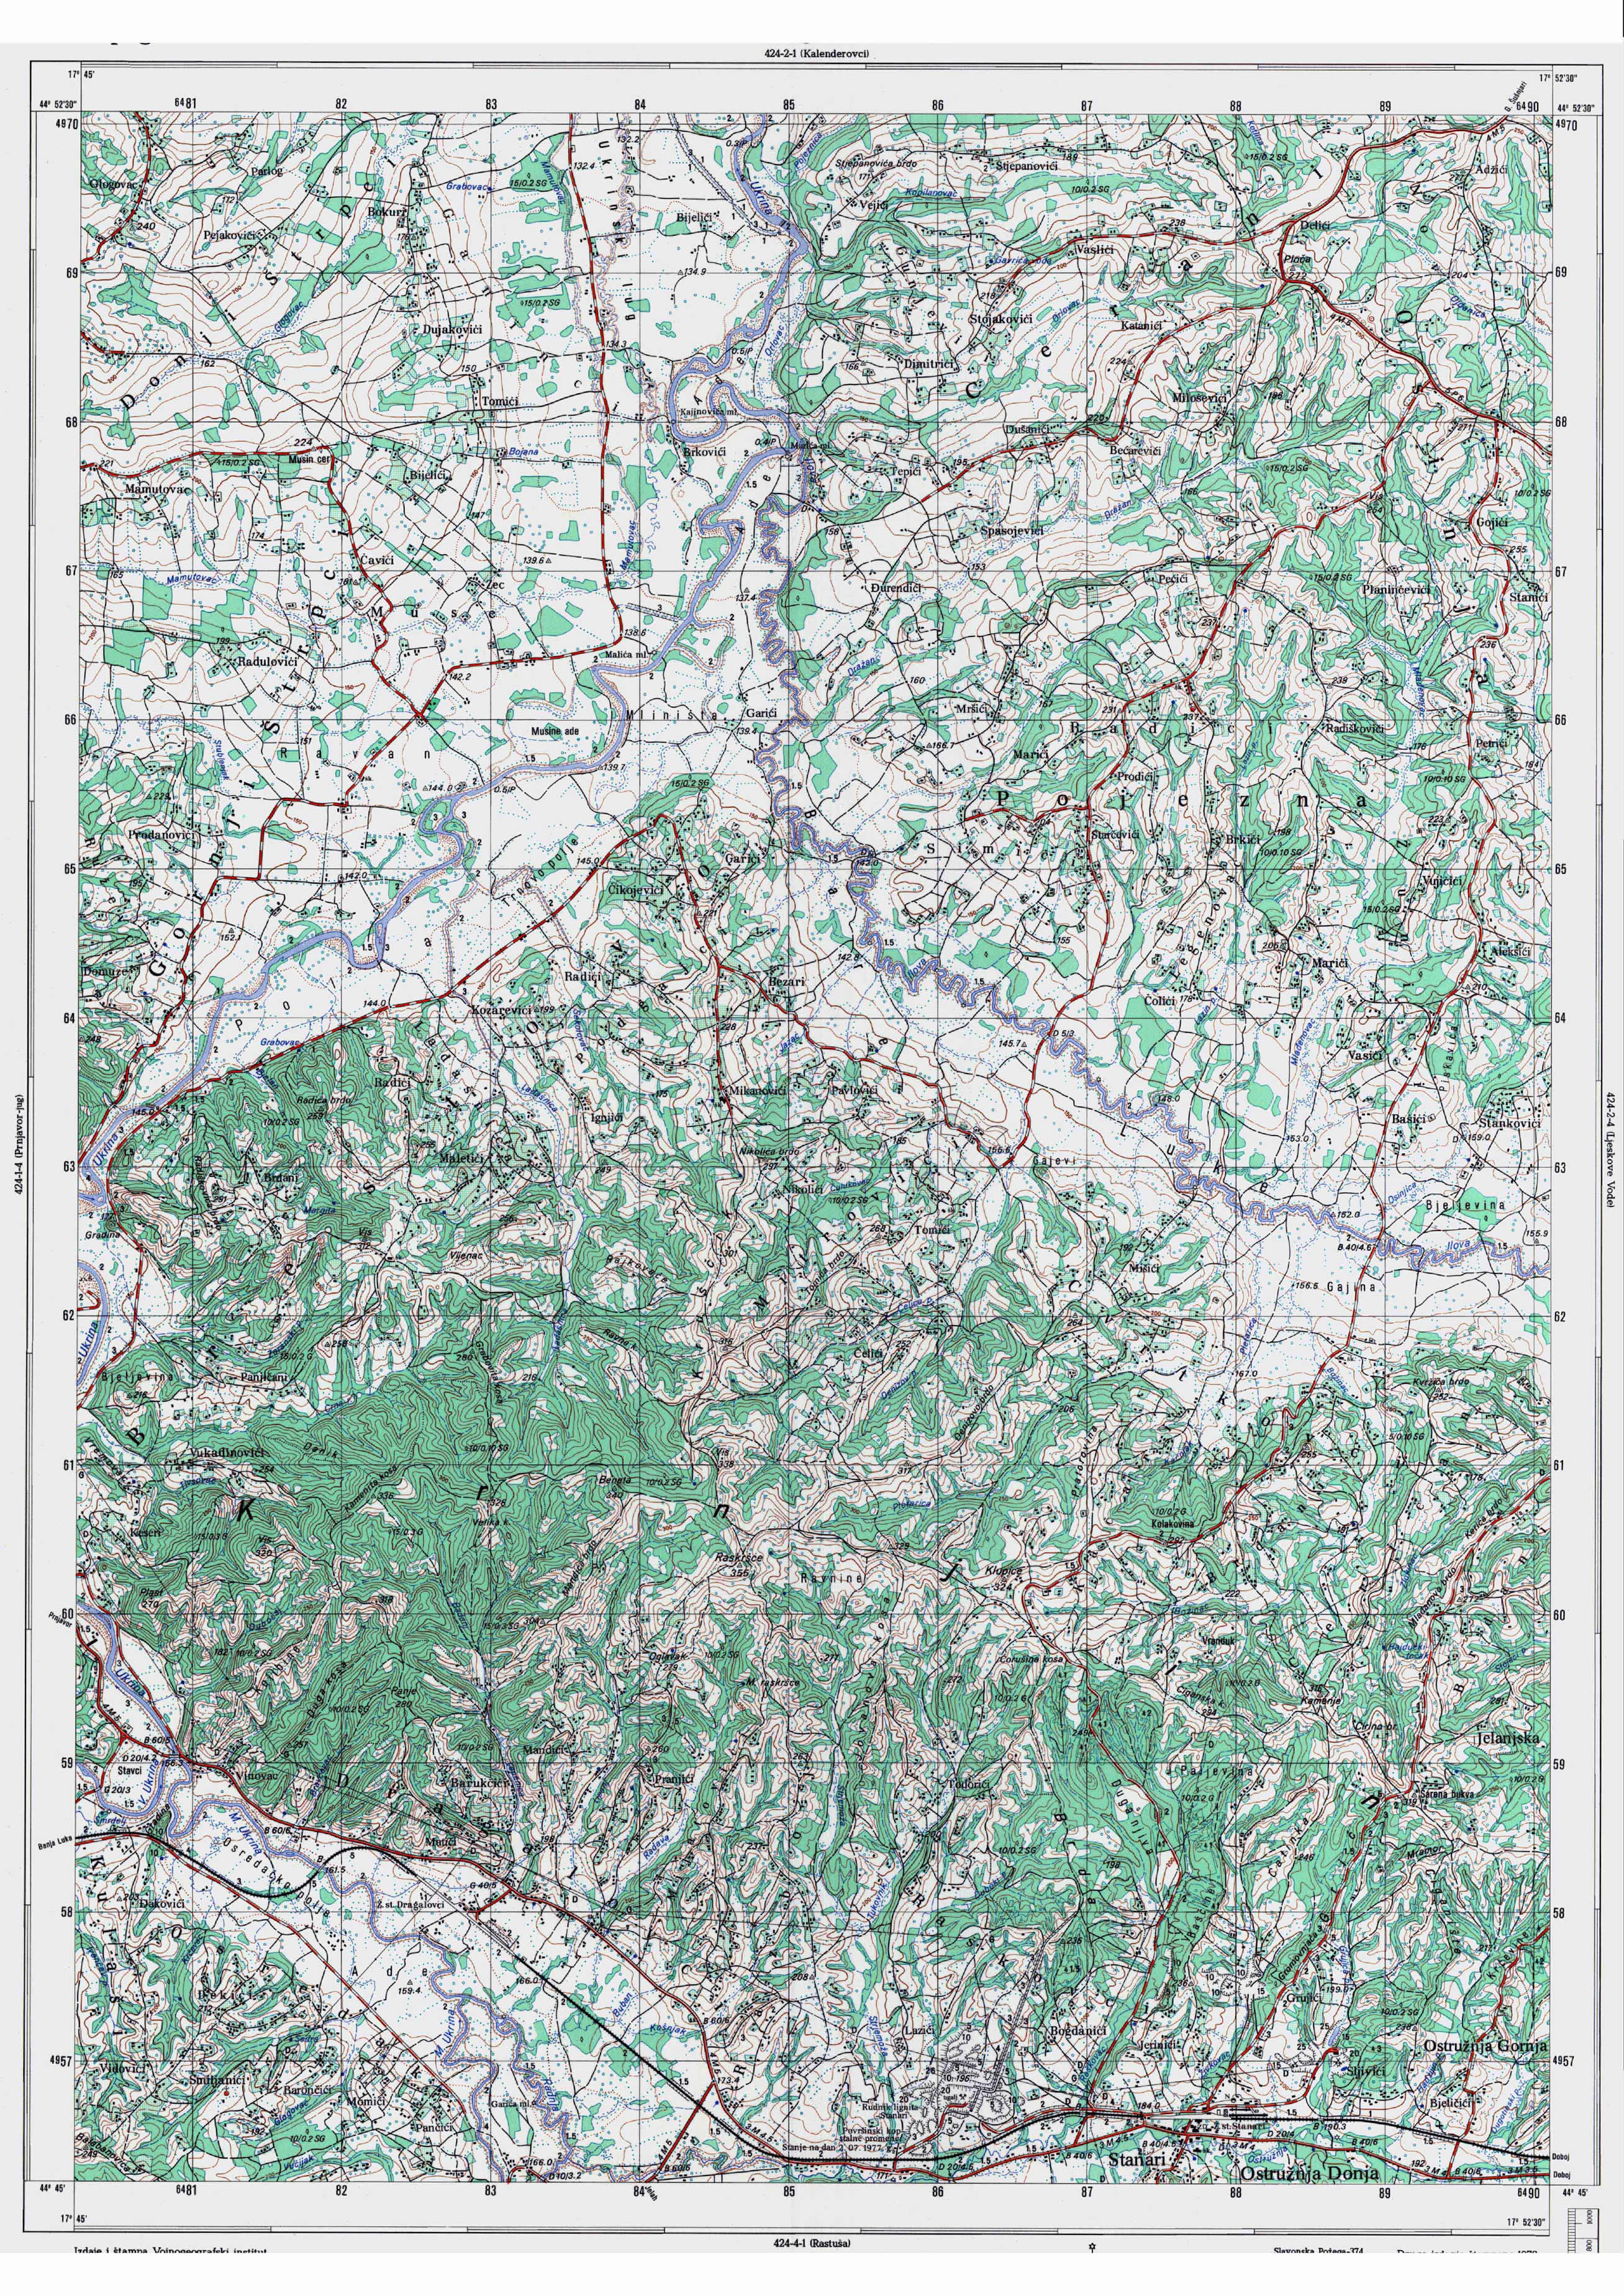  topografska karta BiH 25000 JNA  ostruznja donja